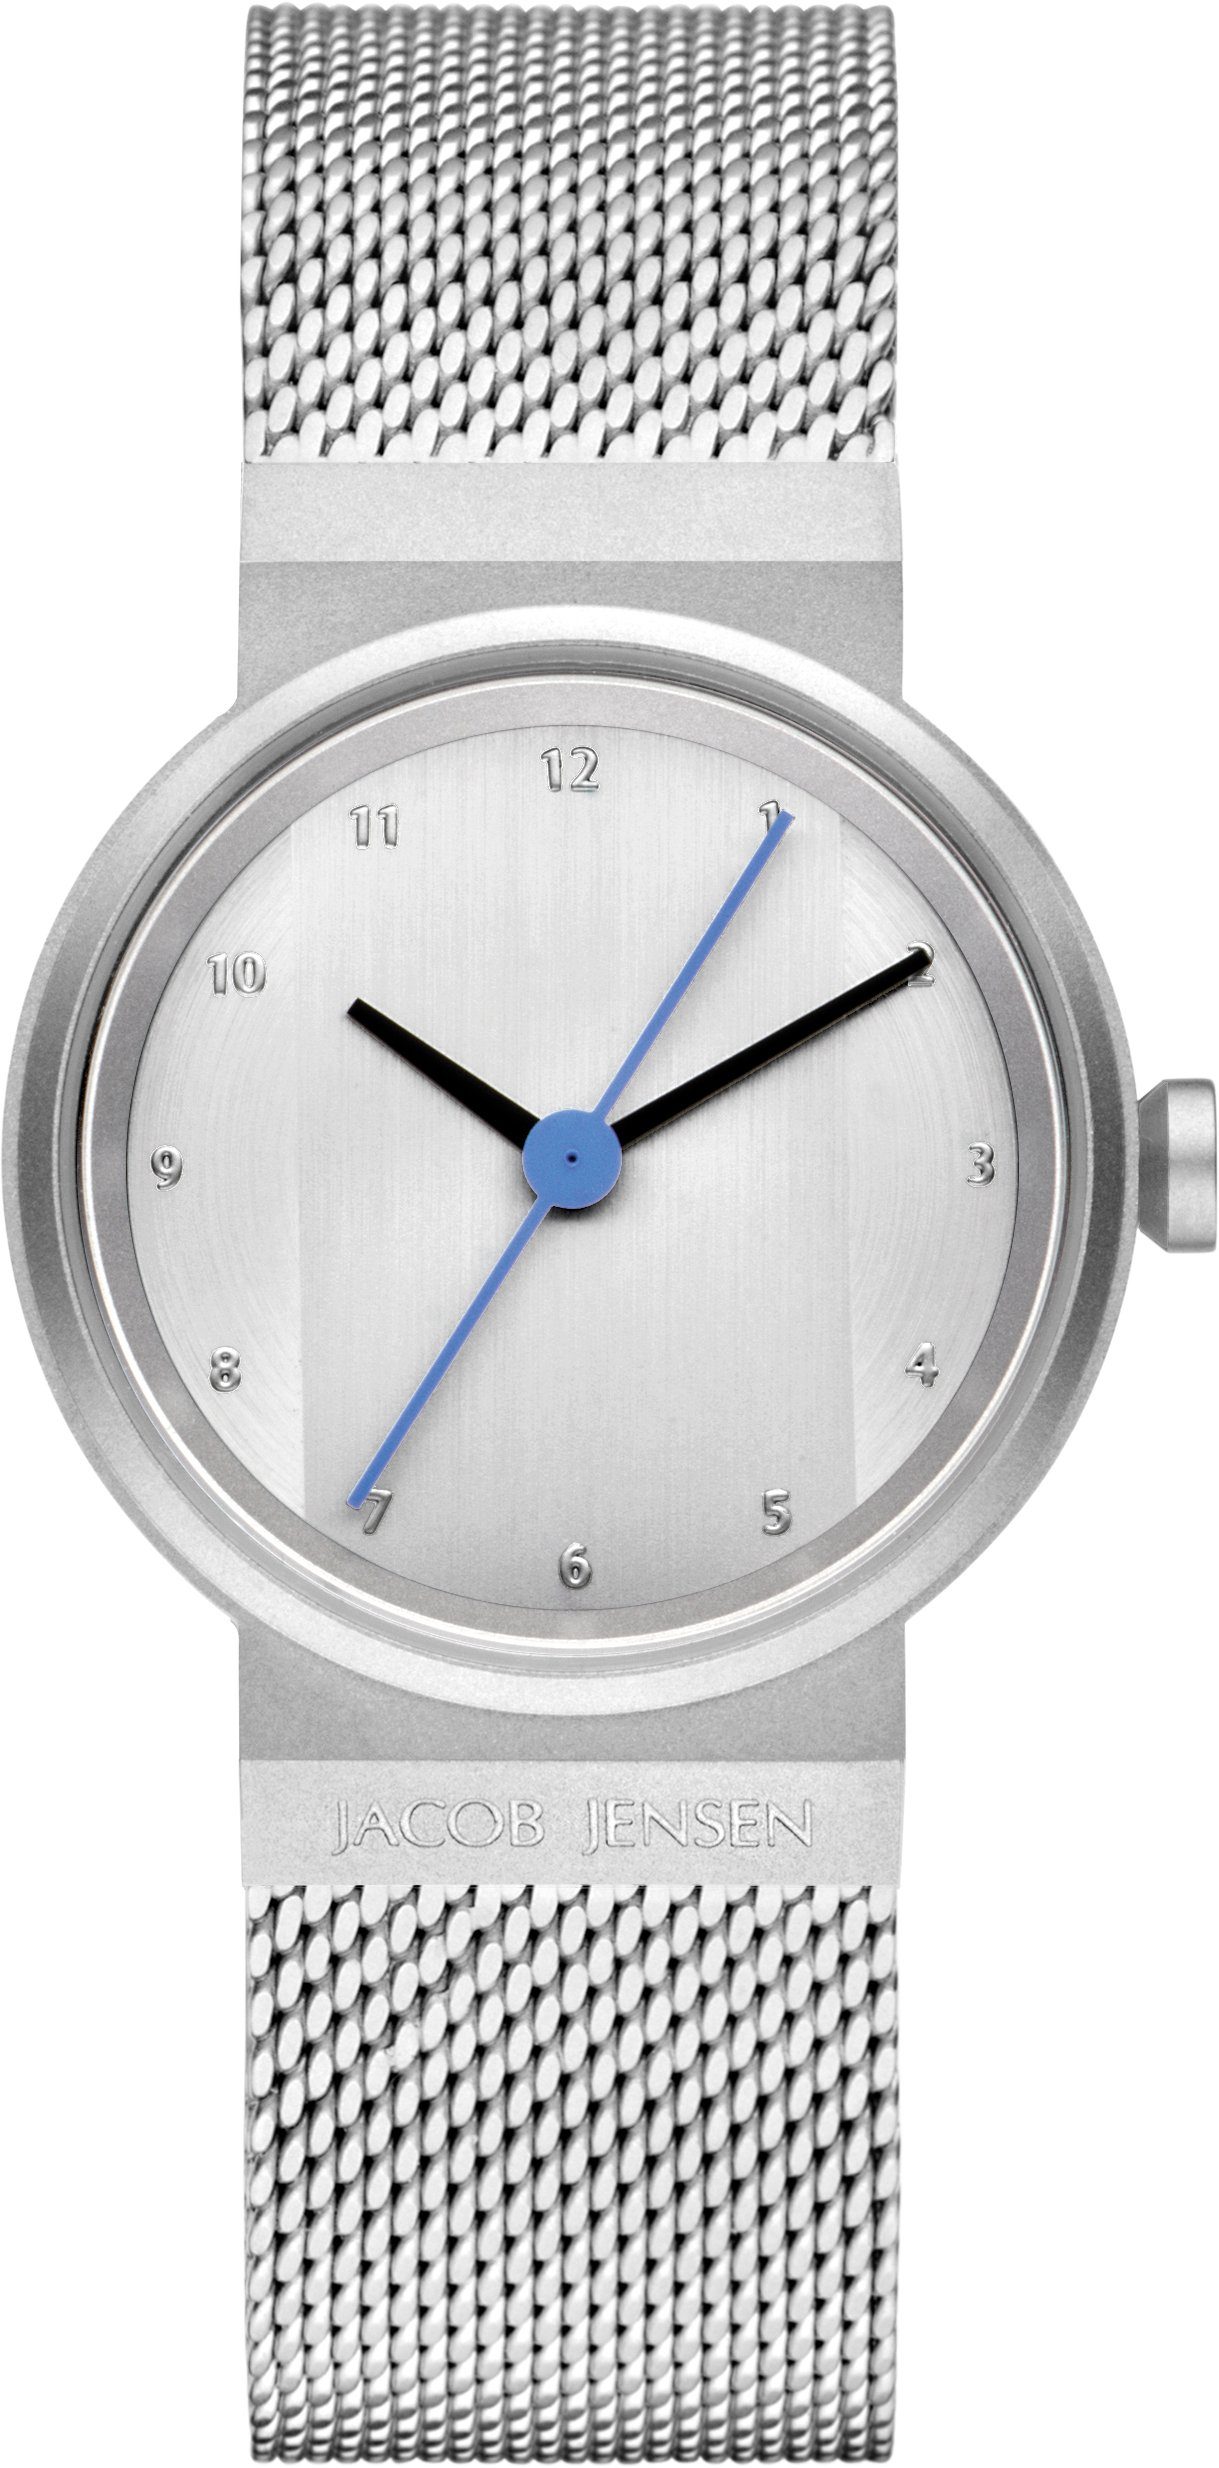 Jacob Jensen Quarzuhr Damenuhr Design Edelstahl Milanaise Uhrband NEW LINE ⌀29mm, extra langer Sekundenzeiger silber